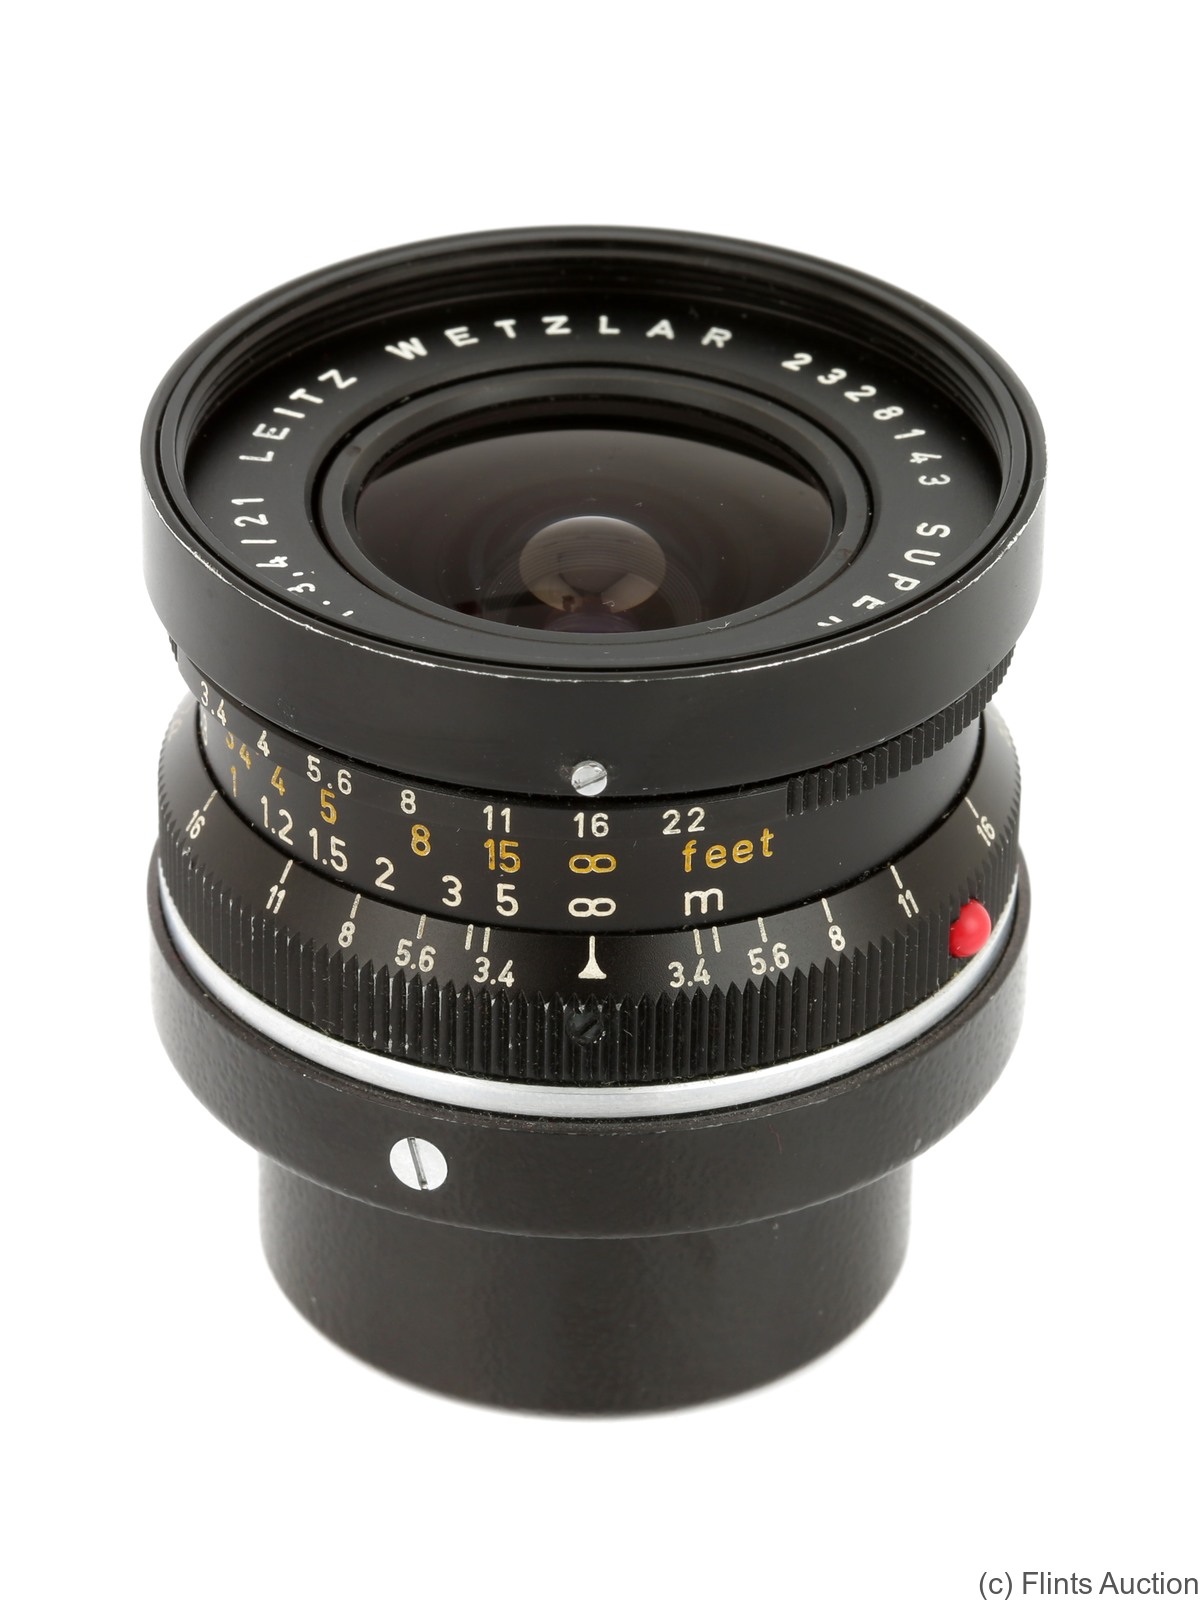 Leitz: 21mm (2.1cm) f3.4 Super-Angulon (BM, black) camera